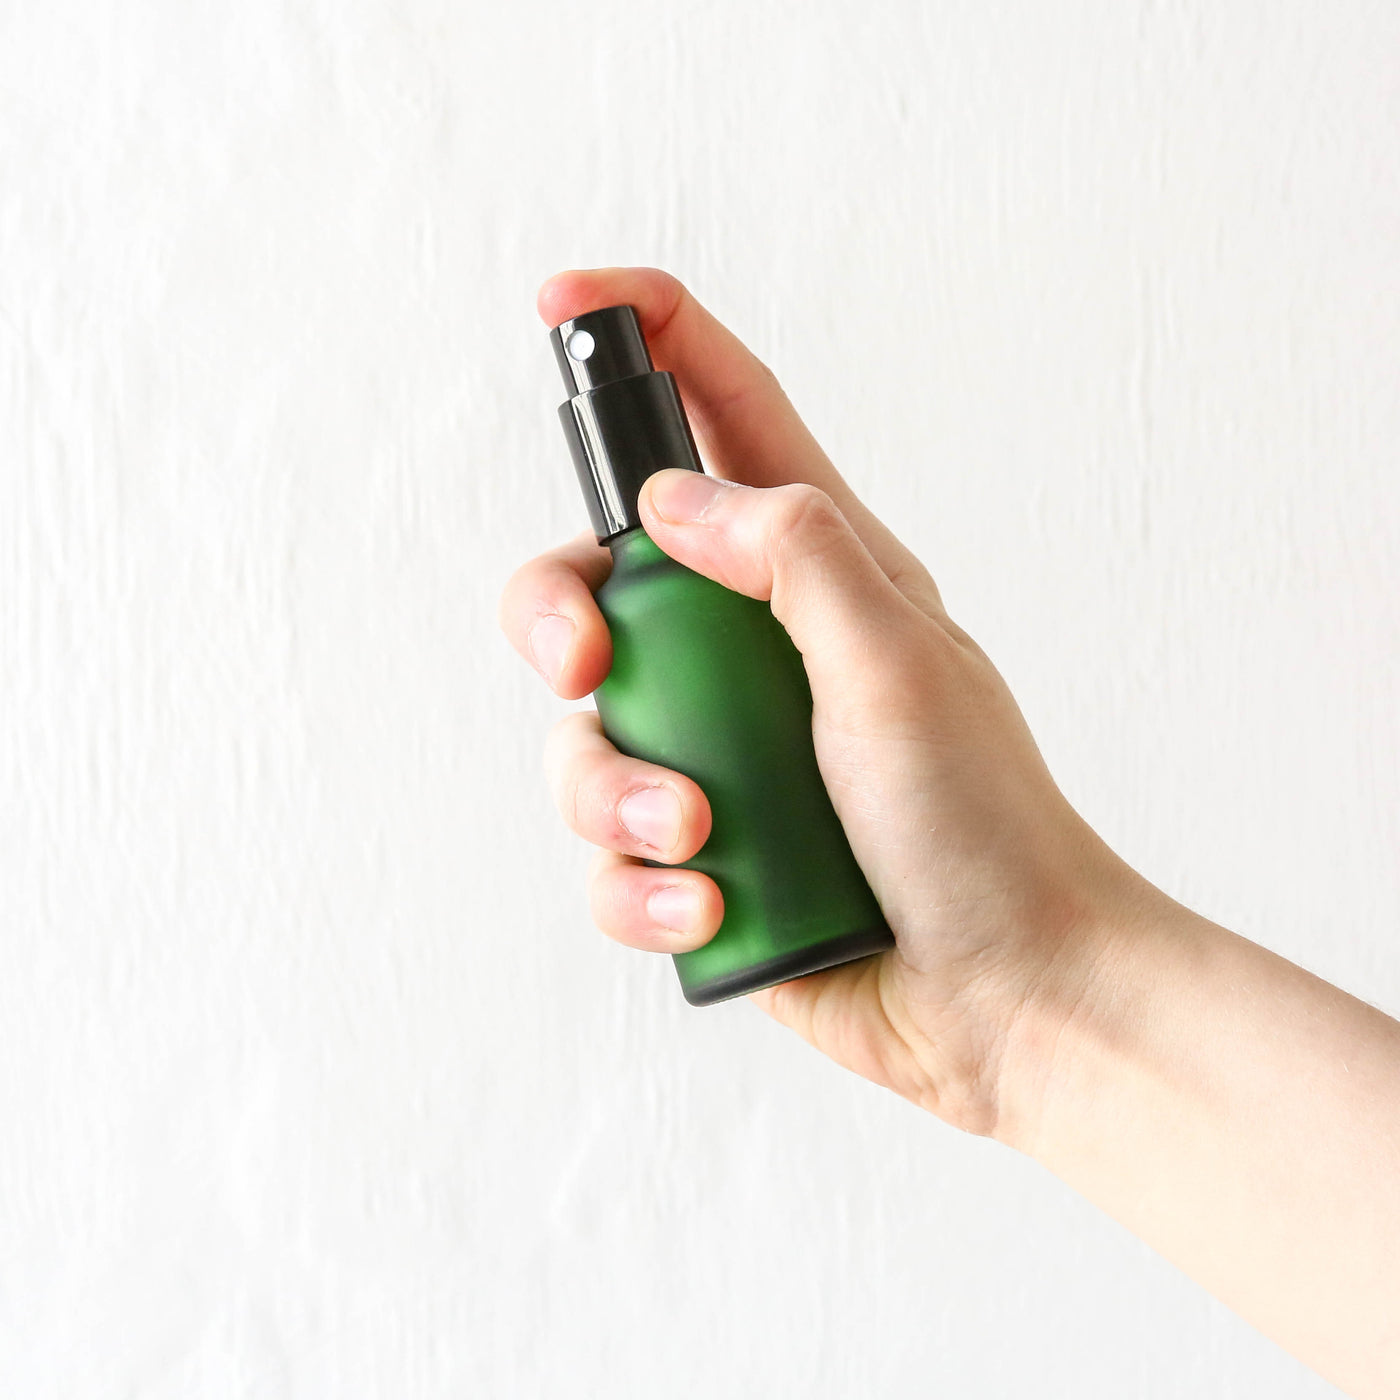 Green Glass Spray Bottle with Atomiser - 50ml